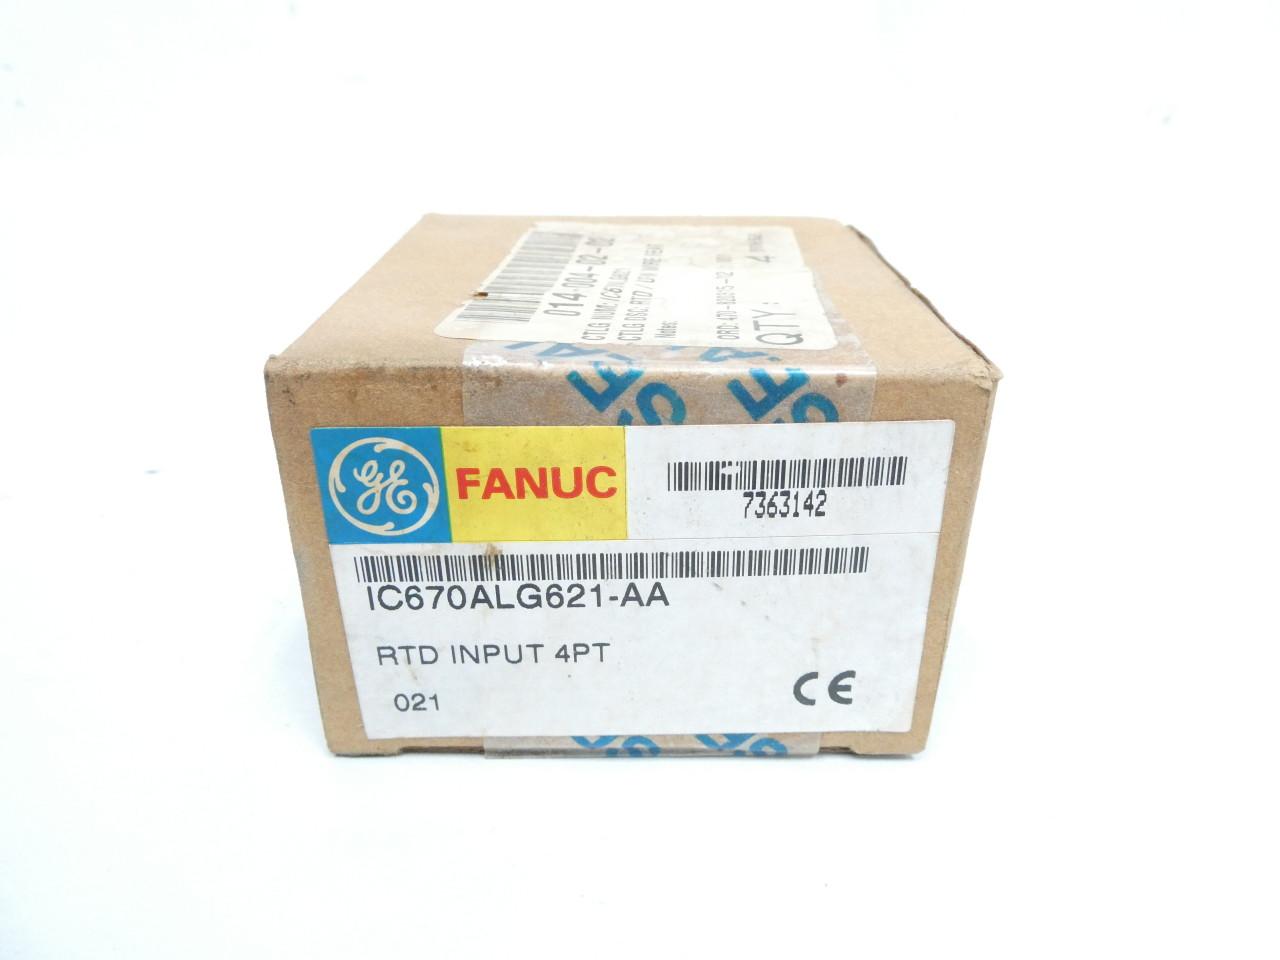 GE FANUC IC670ALG621-AA